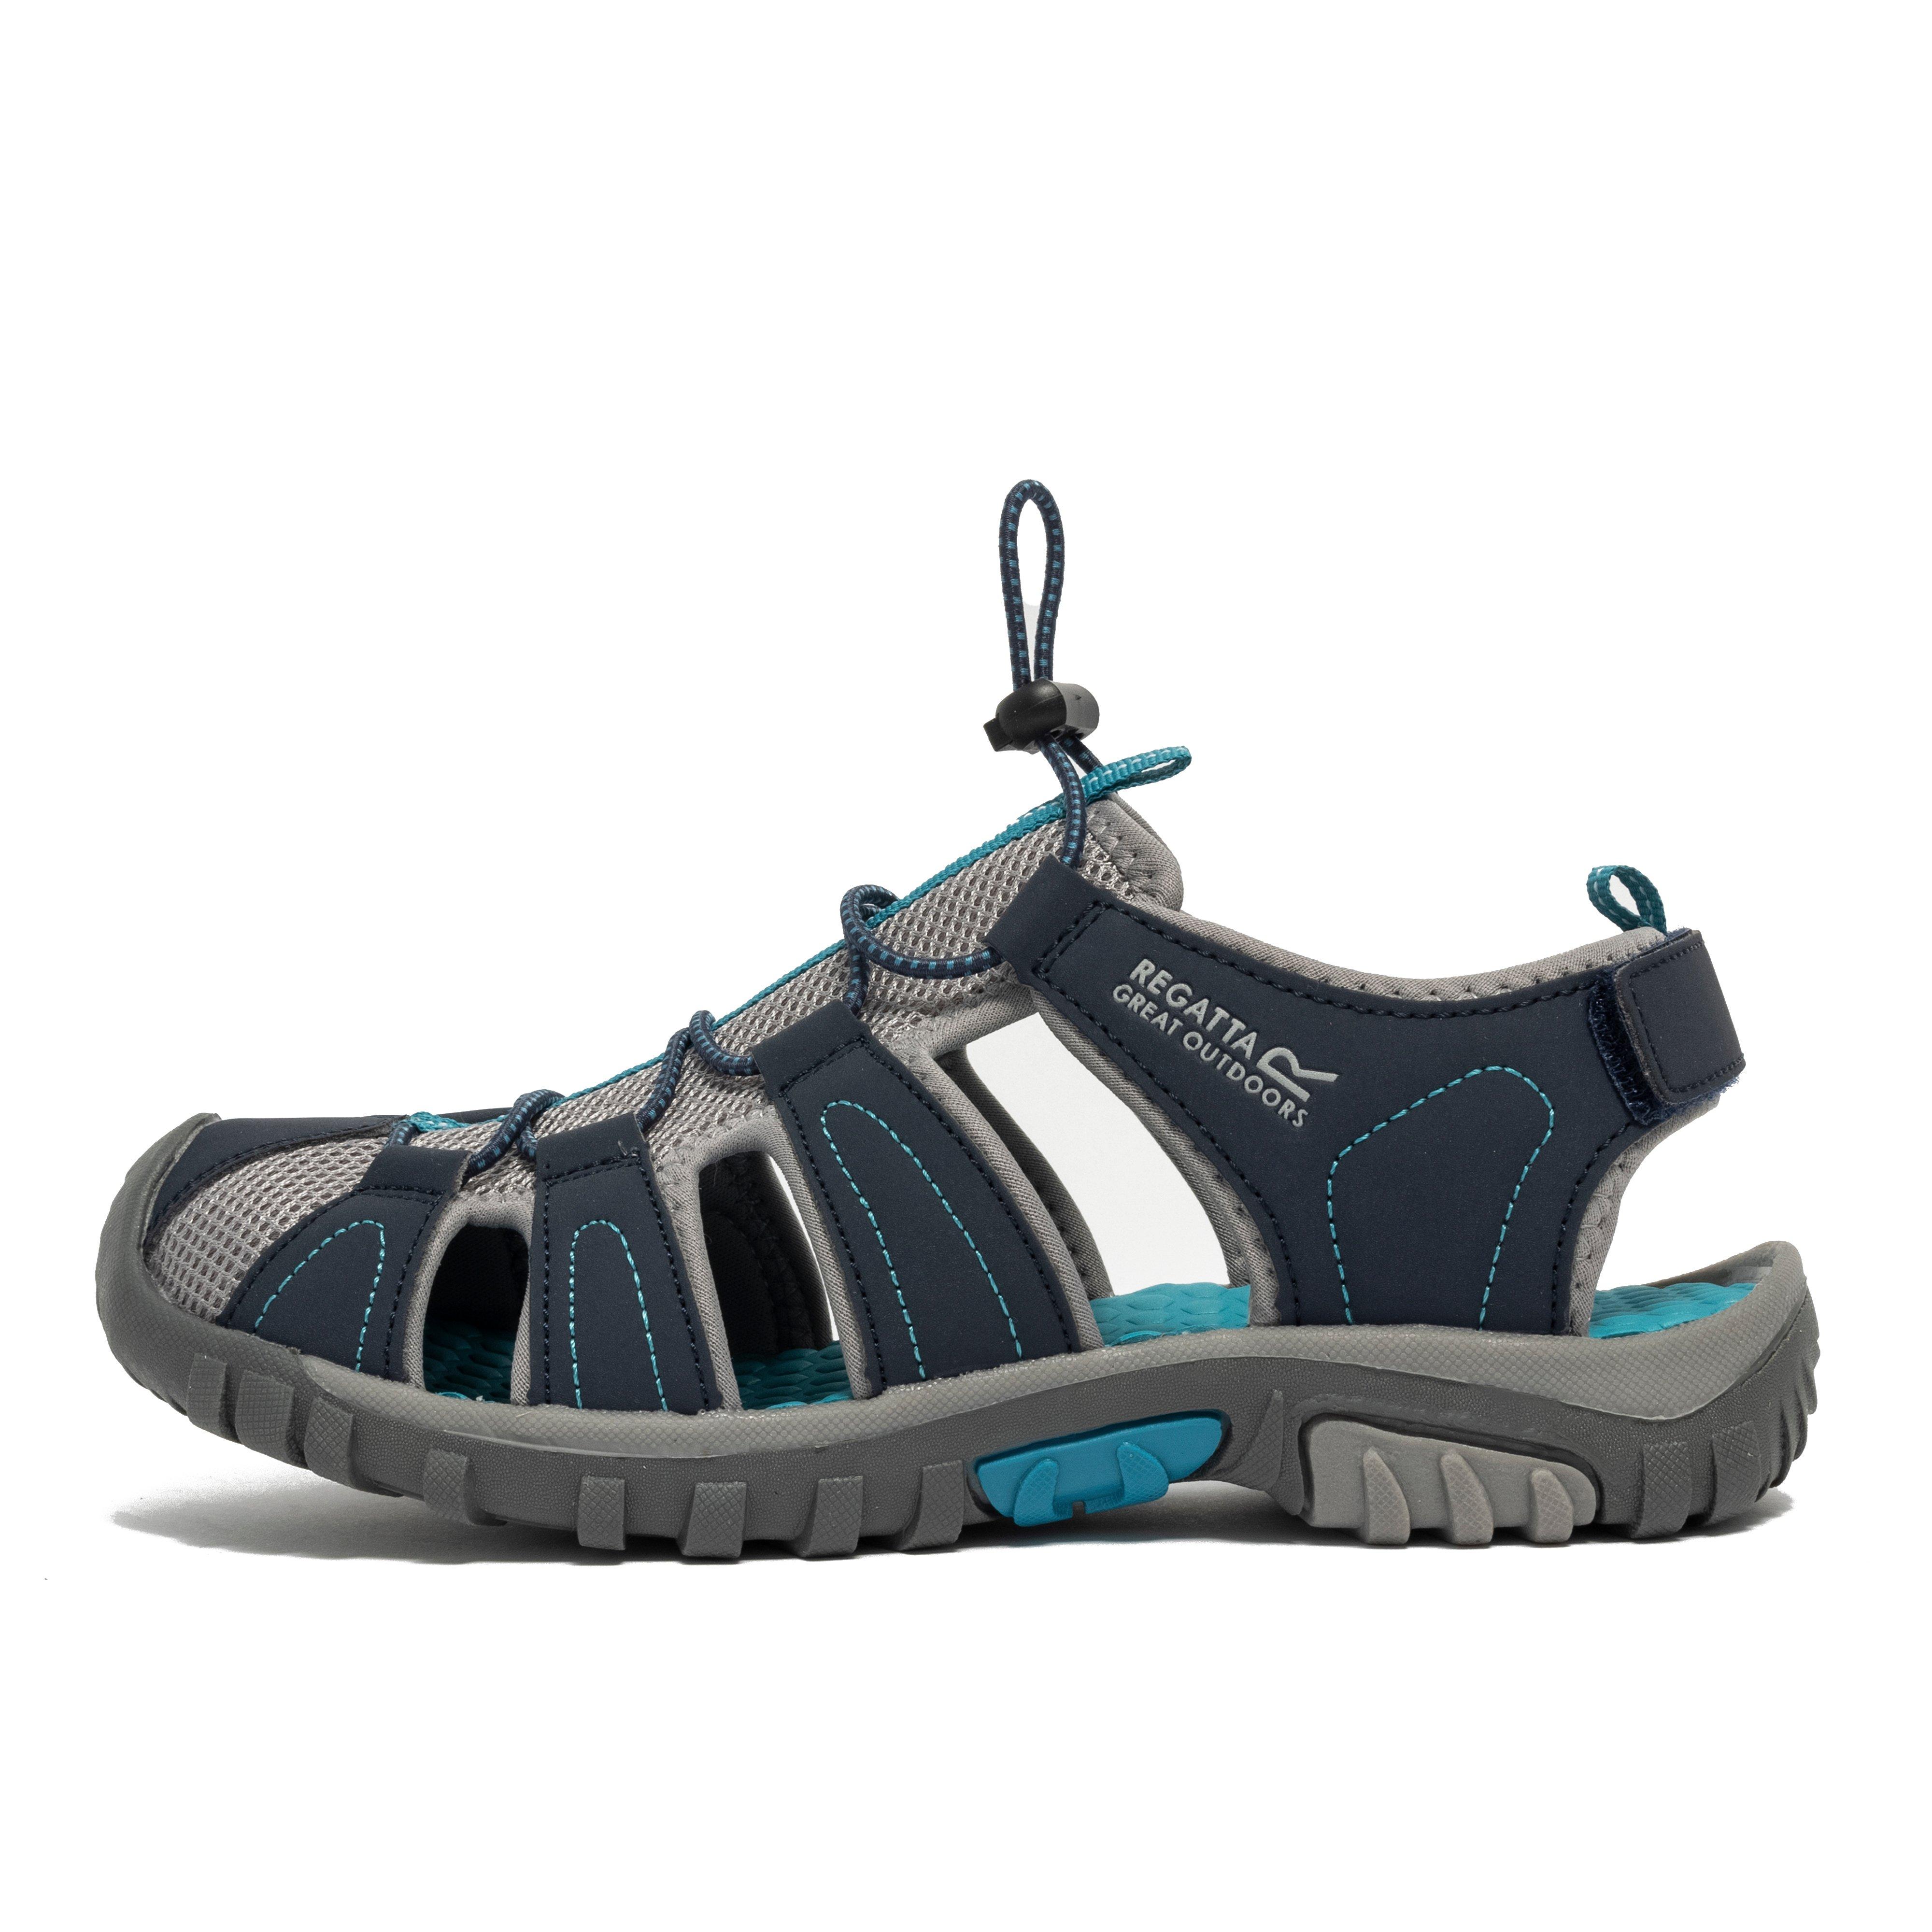 Regatta Kid's Westshore Adventure Sandals Review